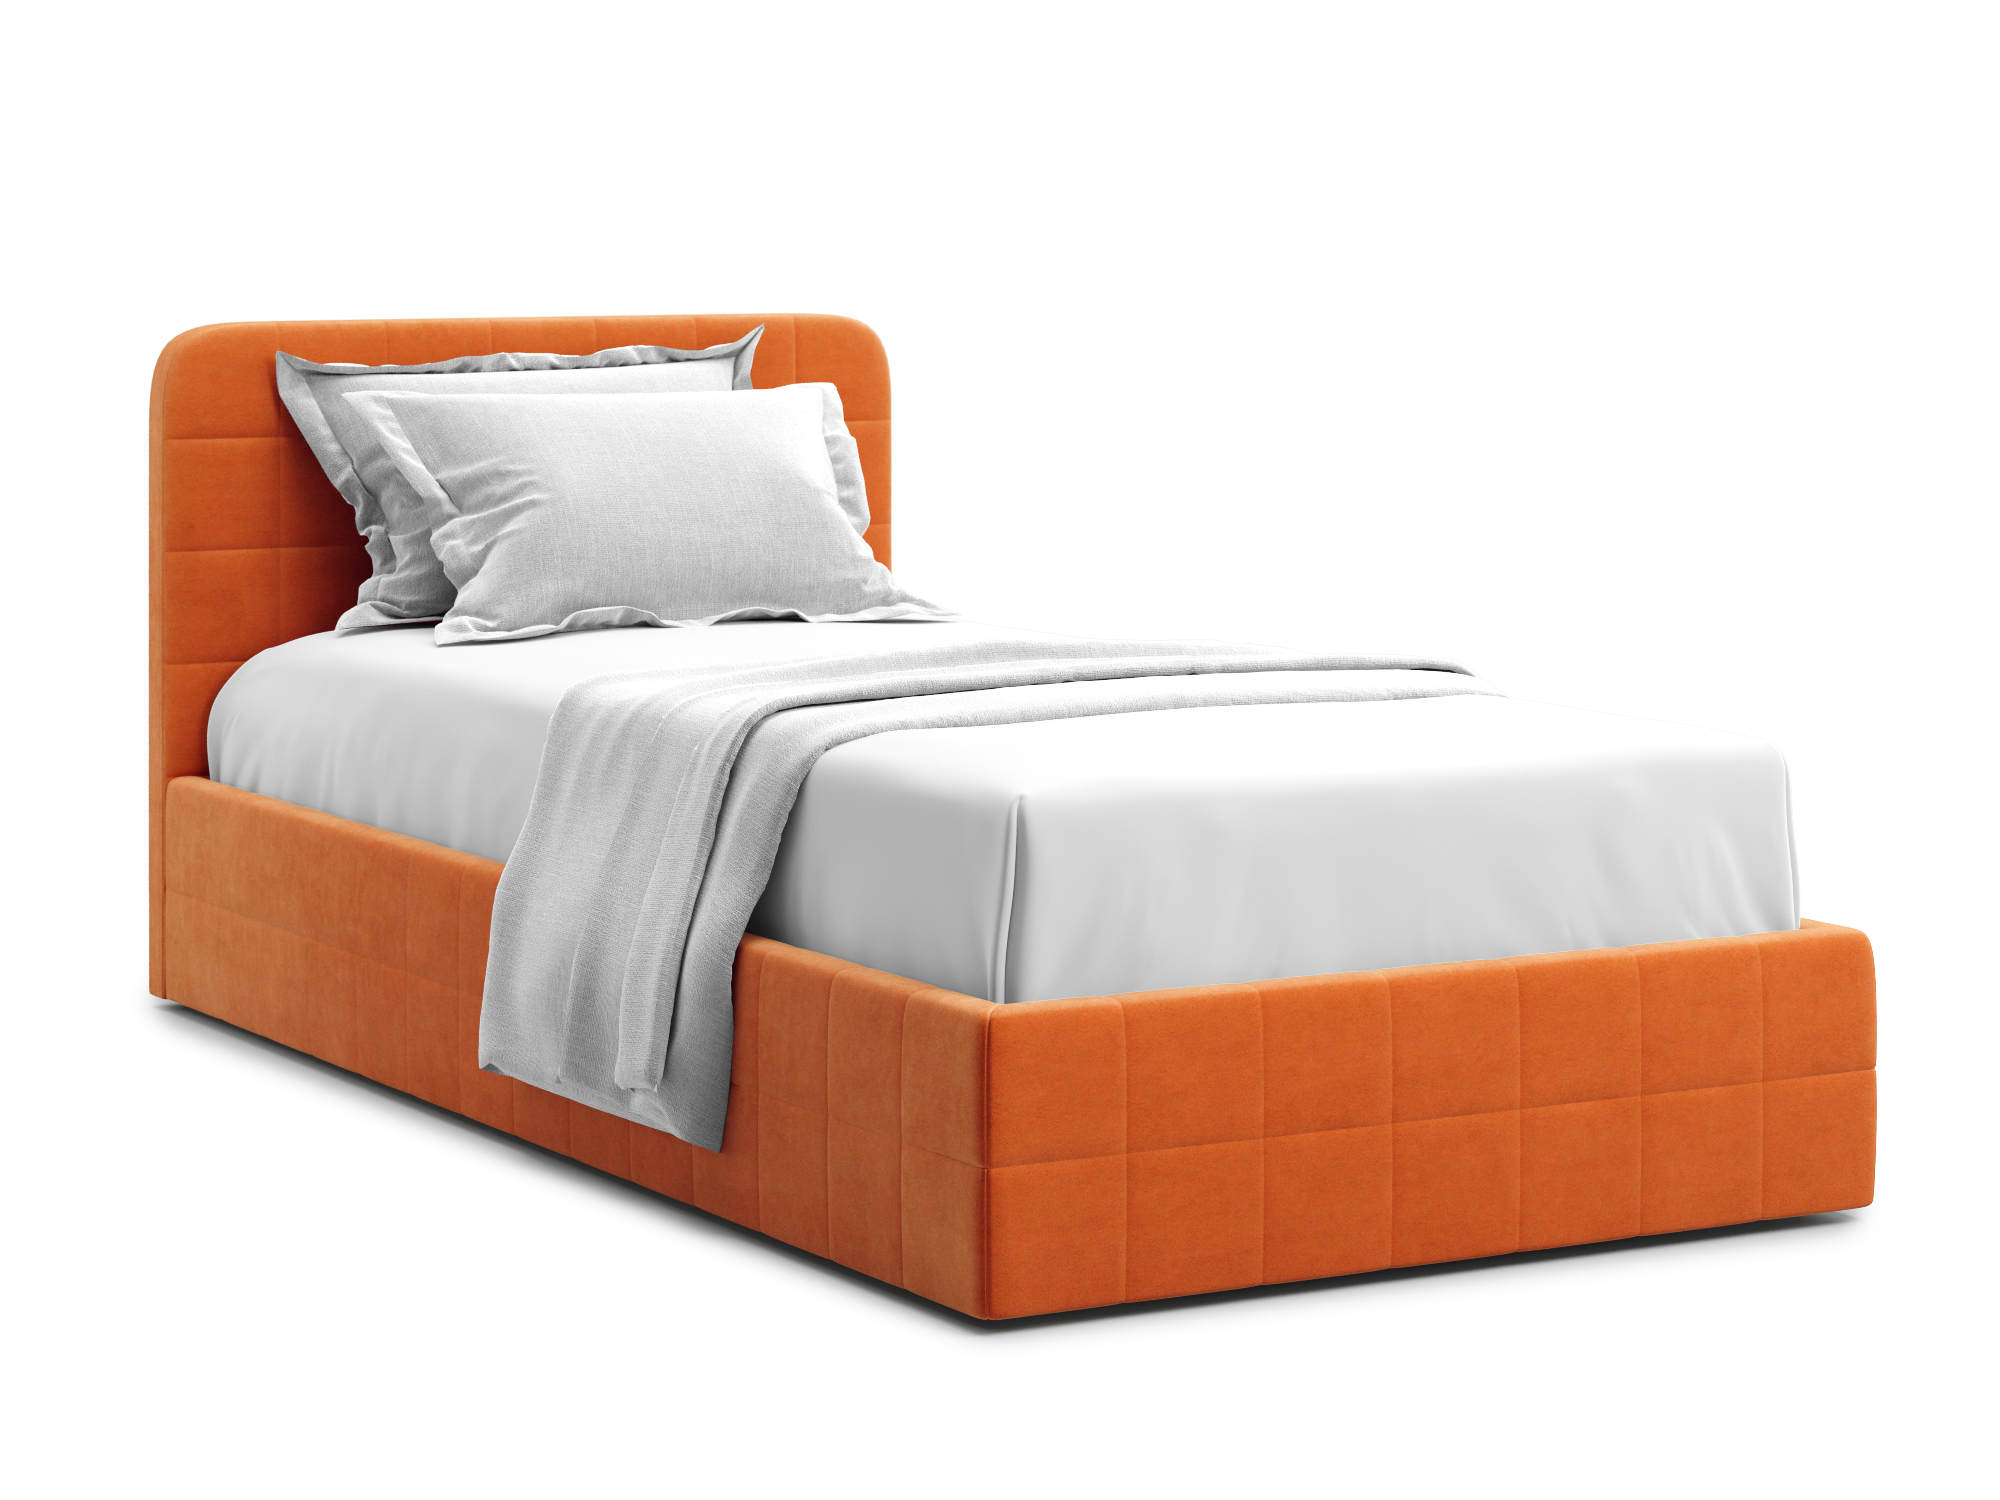 Кровать Adda 120 Velutto 27 Оранжевый, Массив, ДСП кровать adda 120 velutto 27 оранжевый массив дсп